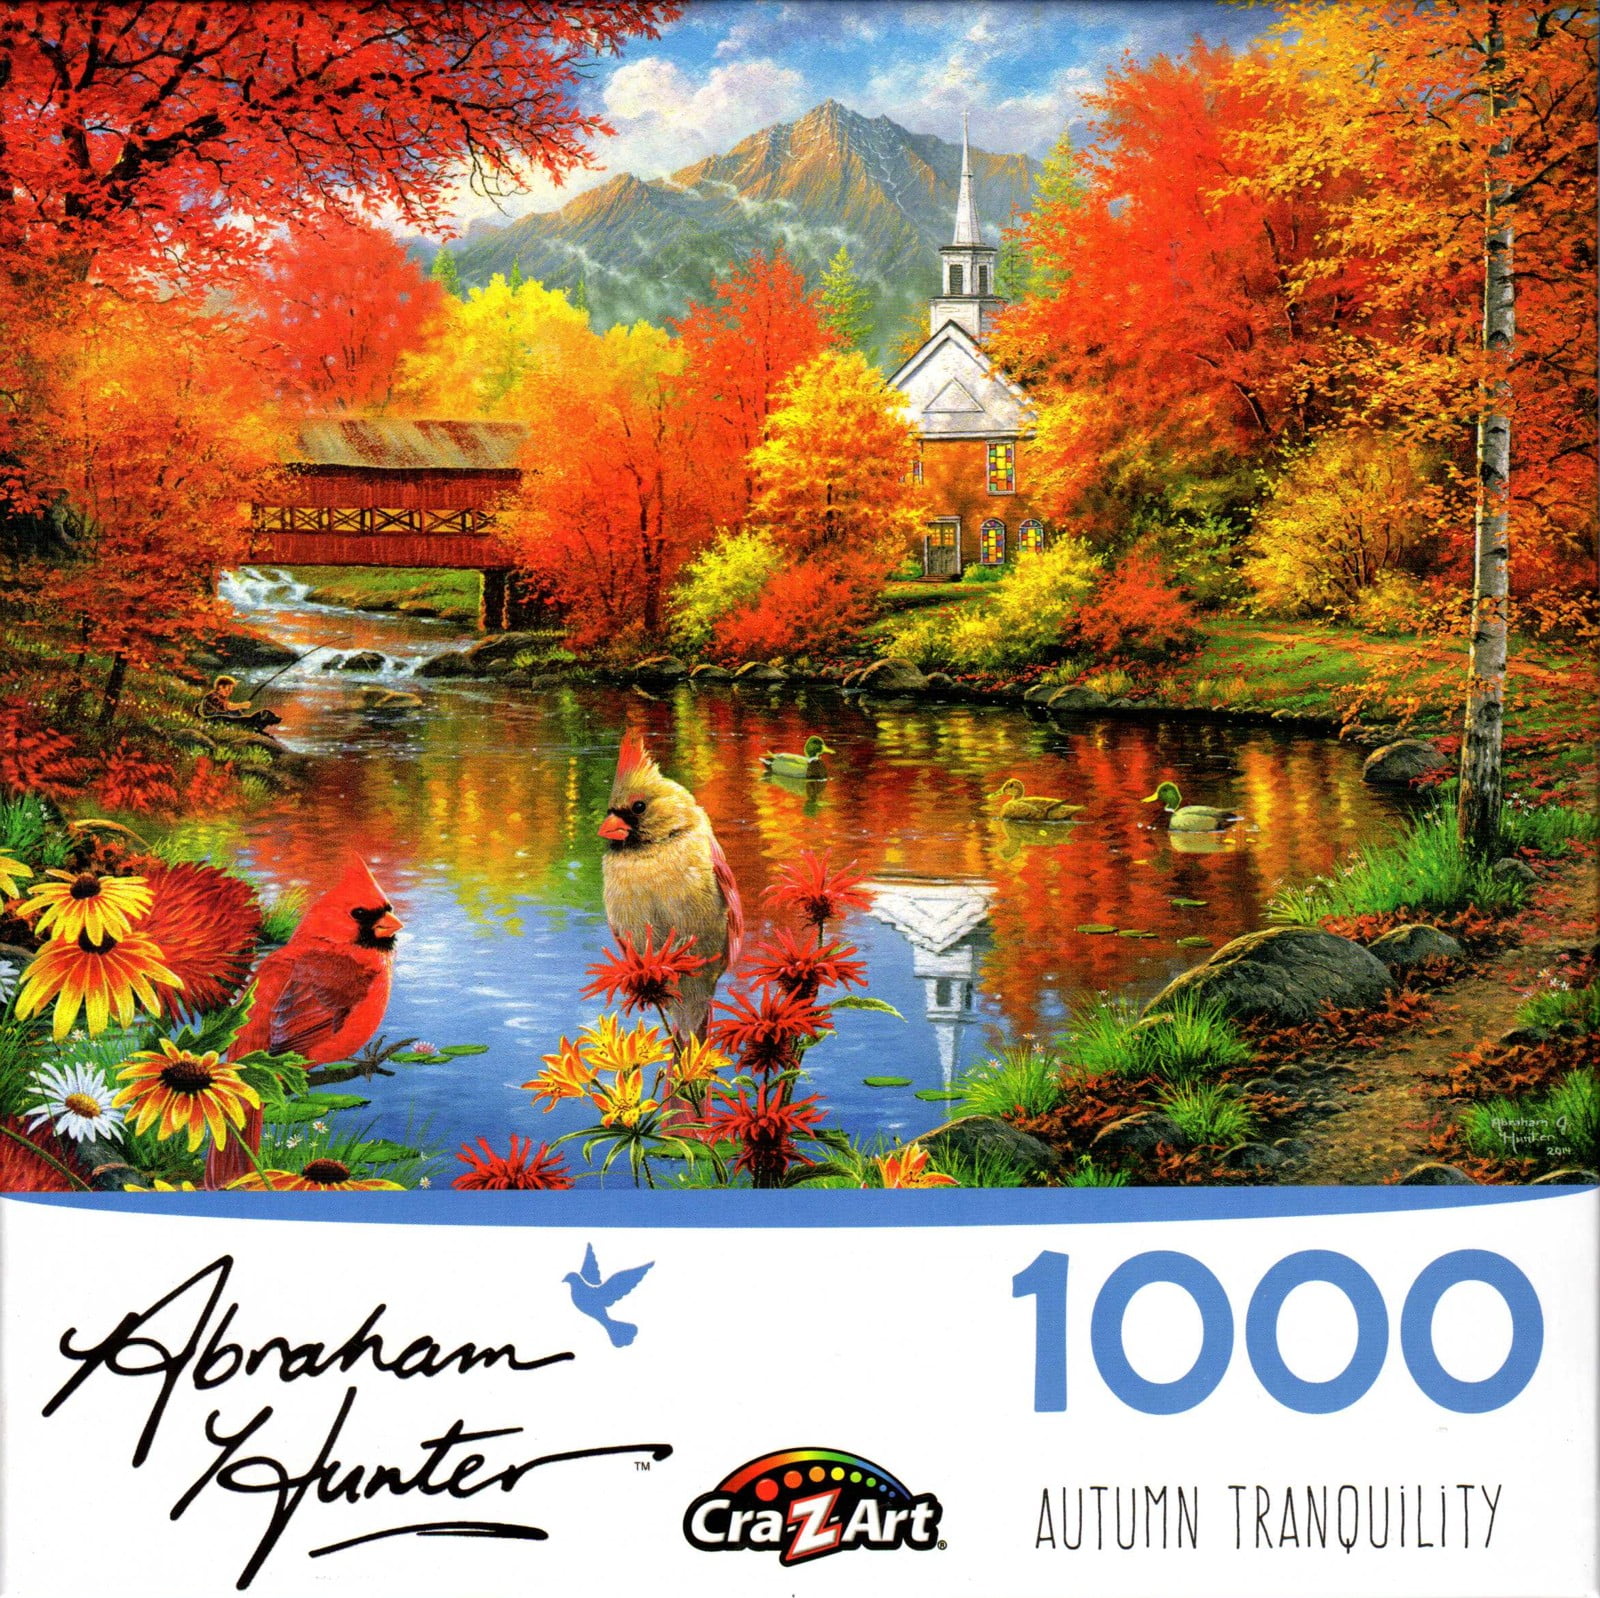 Autumn Tranquility by Abraham Hunter 1000 Piece Puzzle - Walmart.com